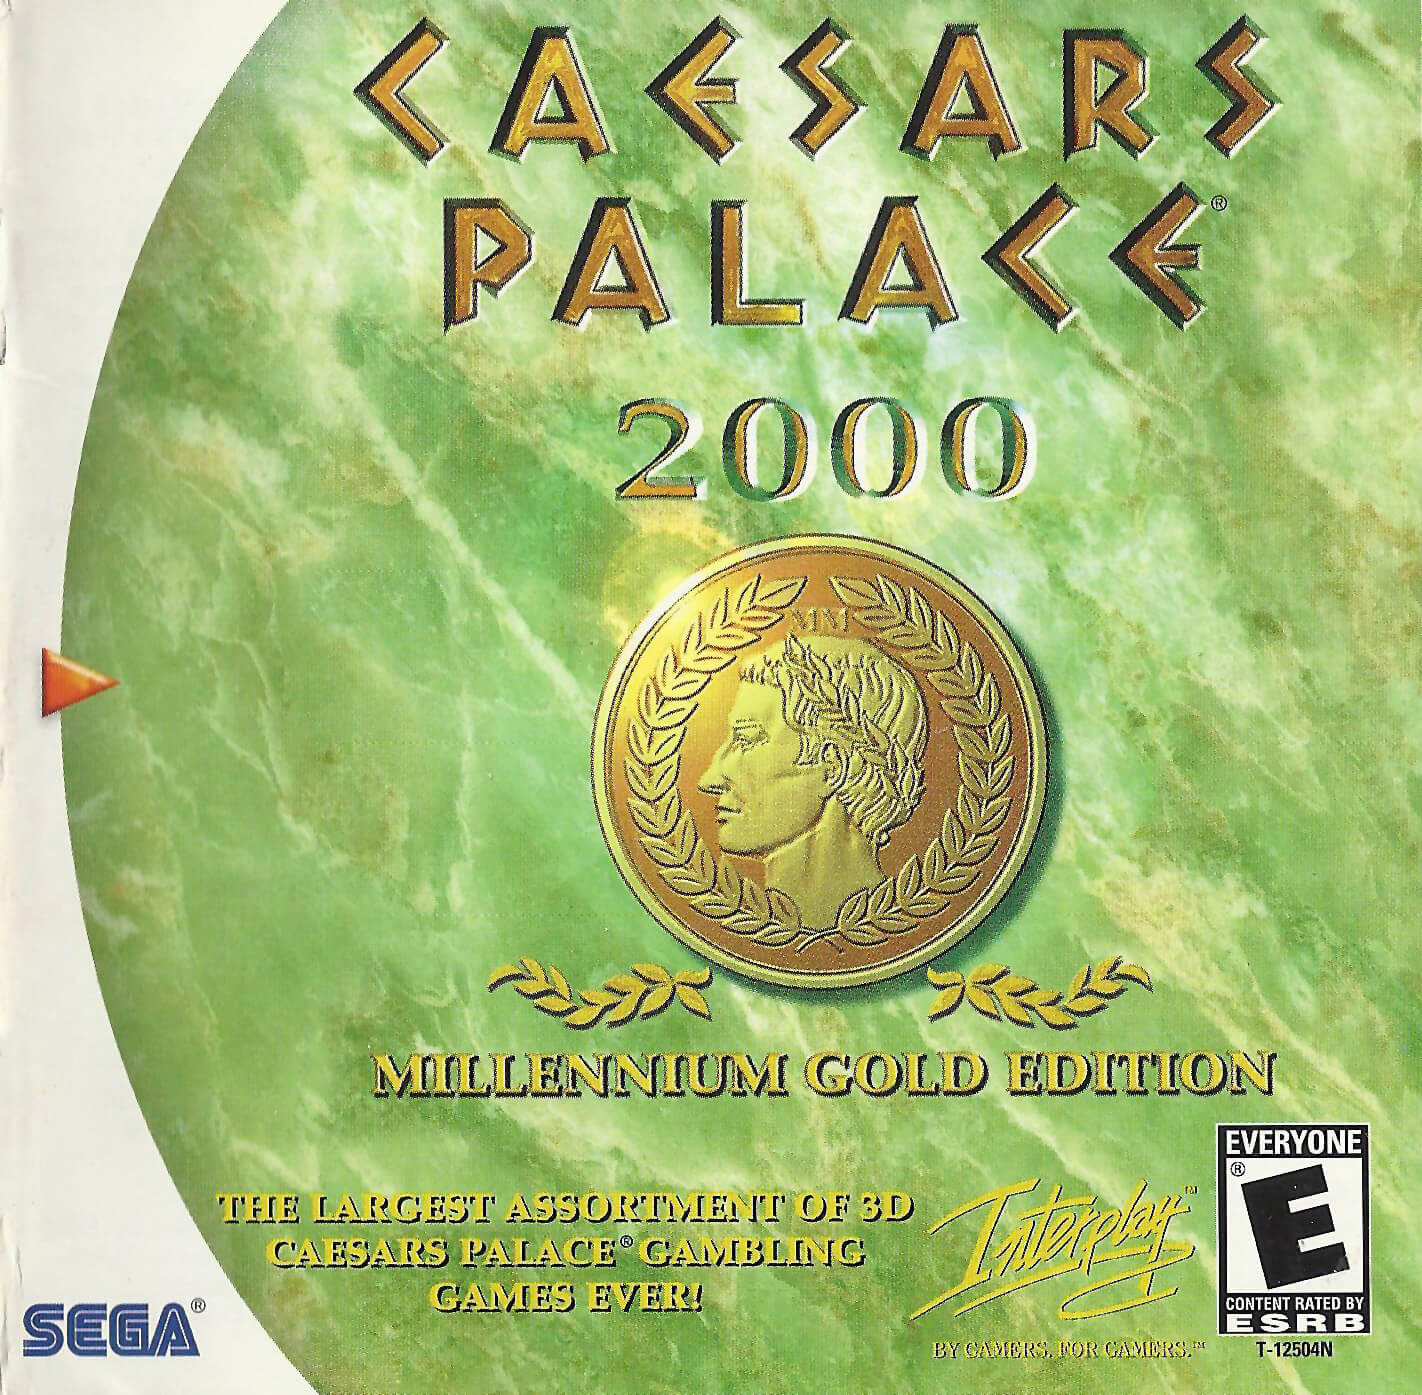 Caesars Palace 2000 Millennium Gold Edition Sega Dreamcast ROM